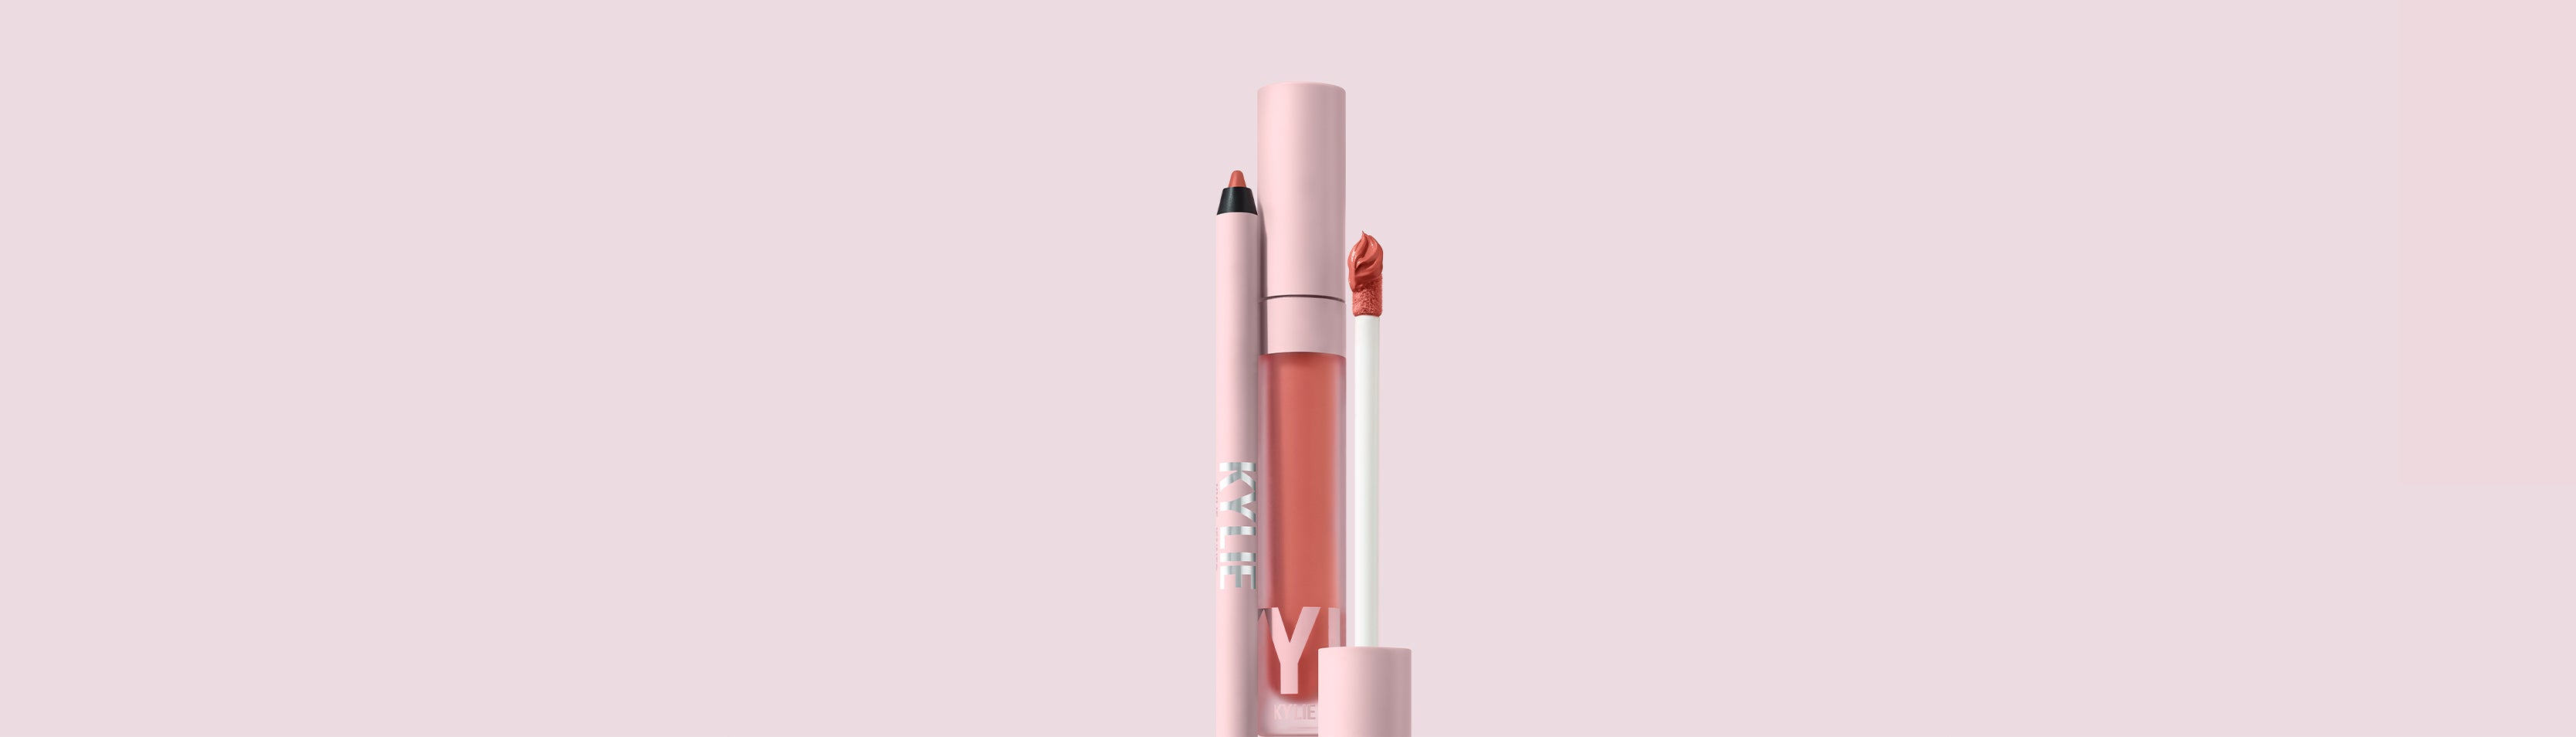 Kylie Cosmetics - Lips - Lip Blushes